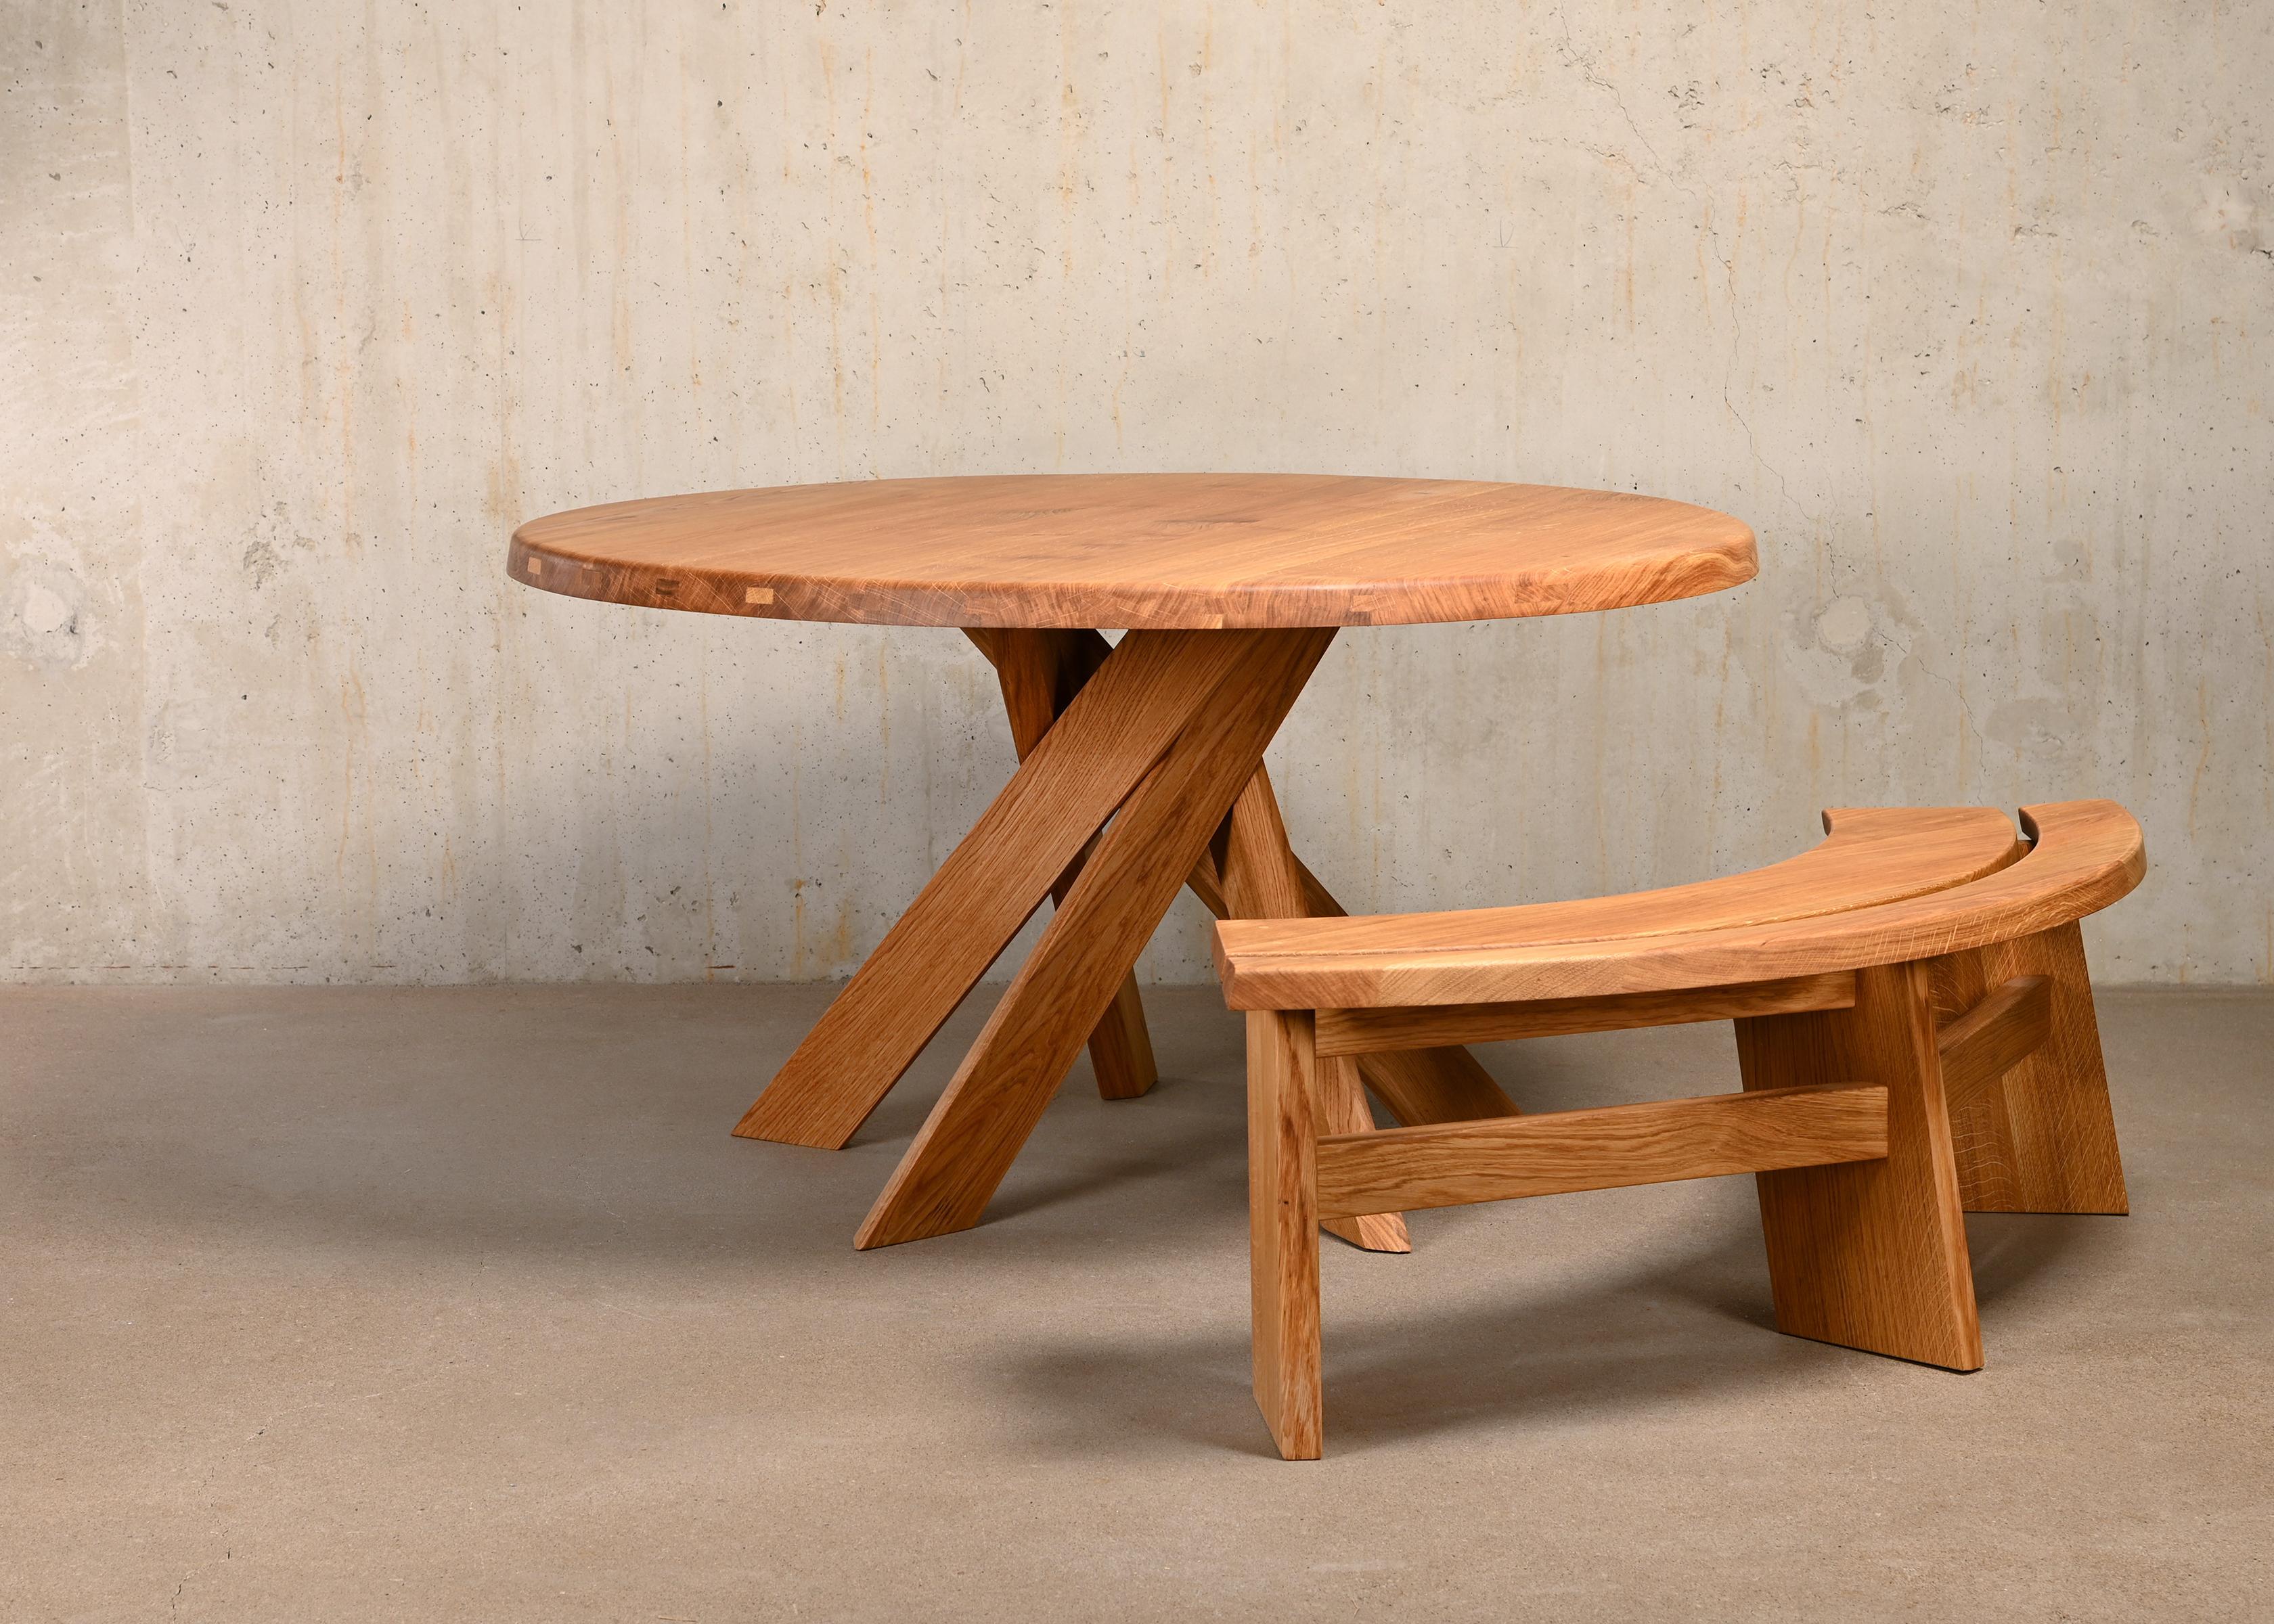 Pierre Chapo Solid Oak T21 'Model D' Table by Chapo Creation, France 2